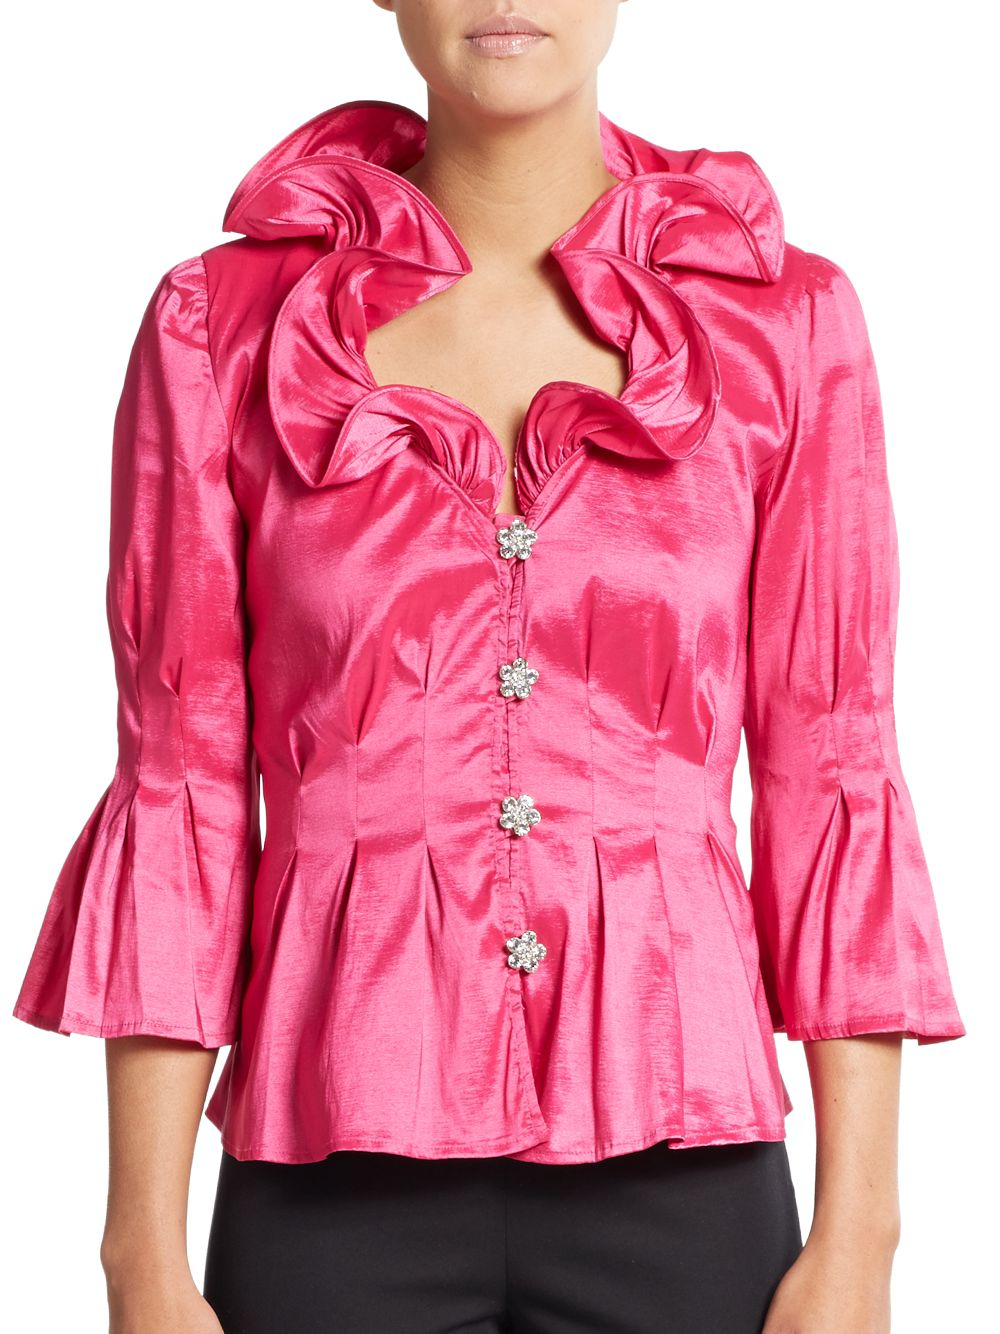 Chetta b Ruffle-neck Blouse in Pink (hot fuschia) - Save 57% | Lyst